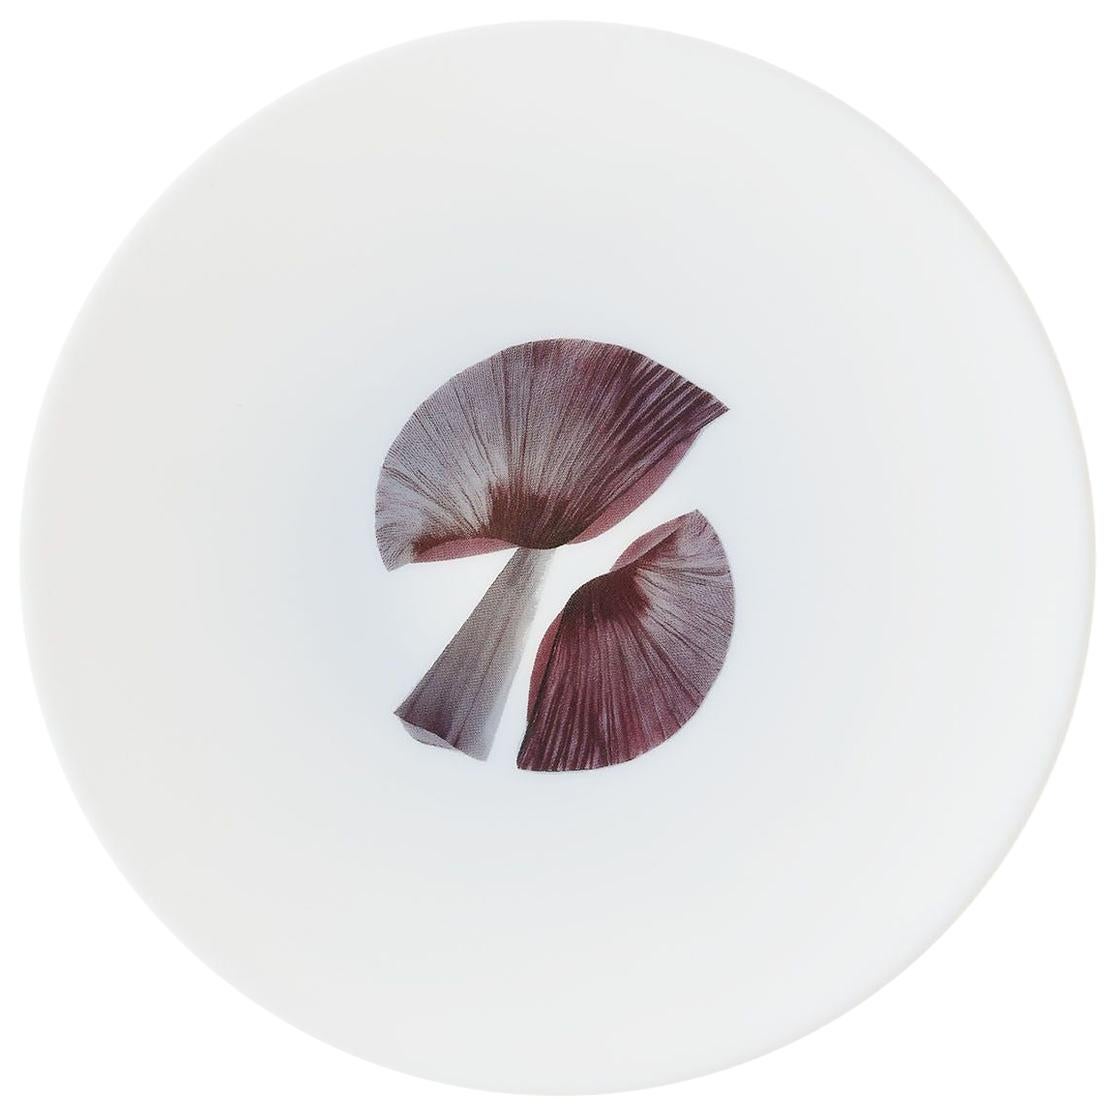 Bread Porcelain Plate By The Chef Alain Passard Model " Mushroom" For Sale